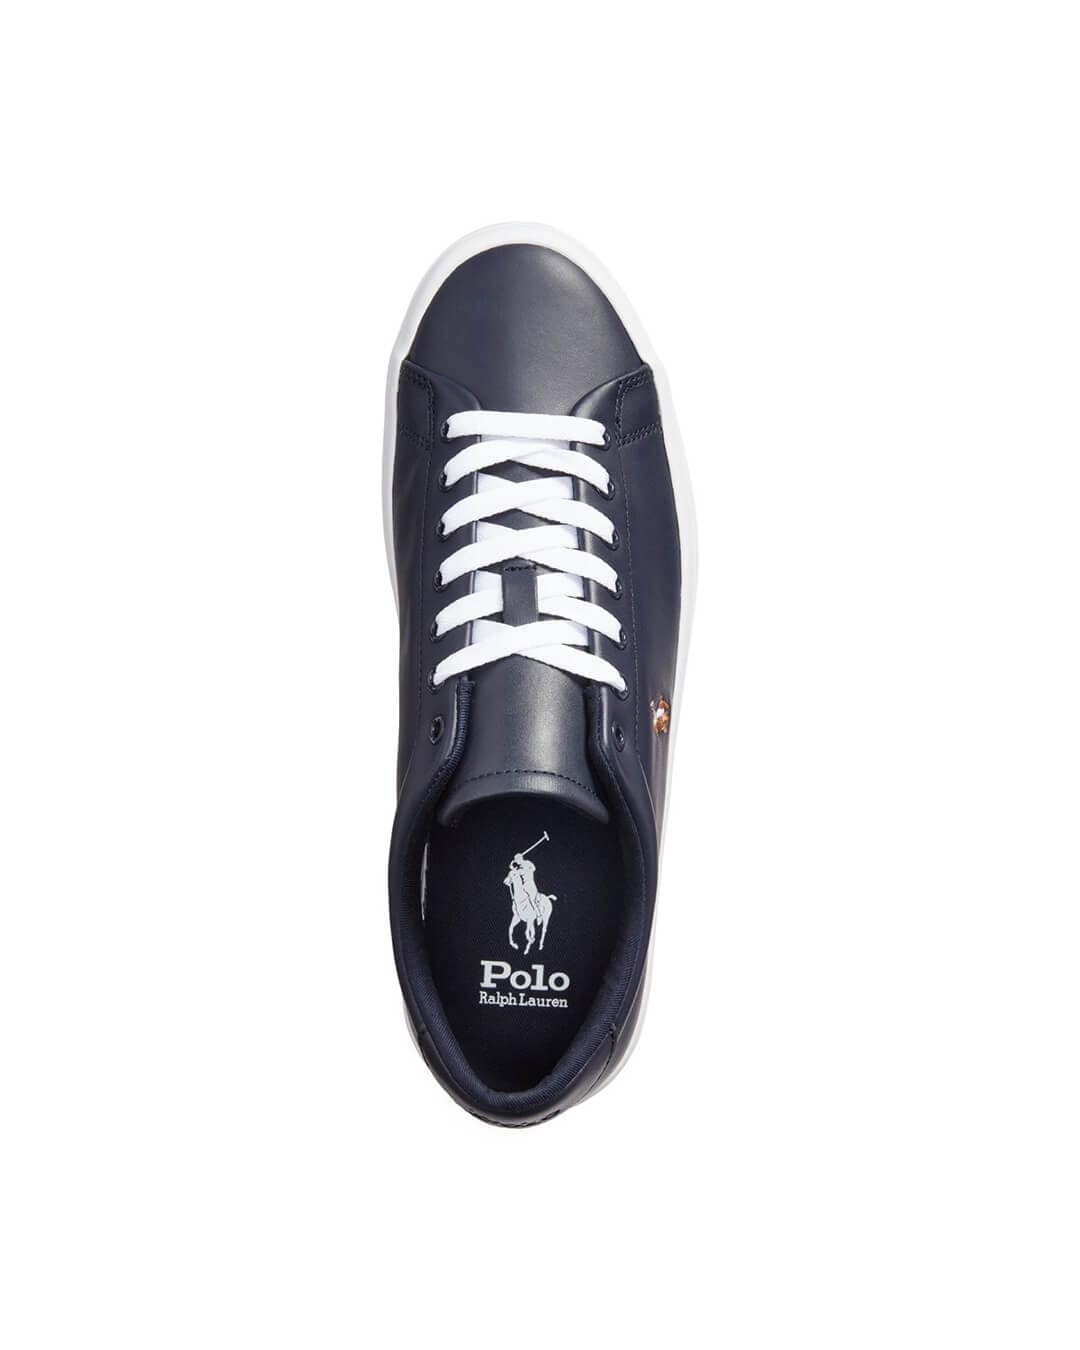 Polo Ralph Lauren Shoes Polo Ralph Lauren Navy Classic Pony Sneakers